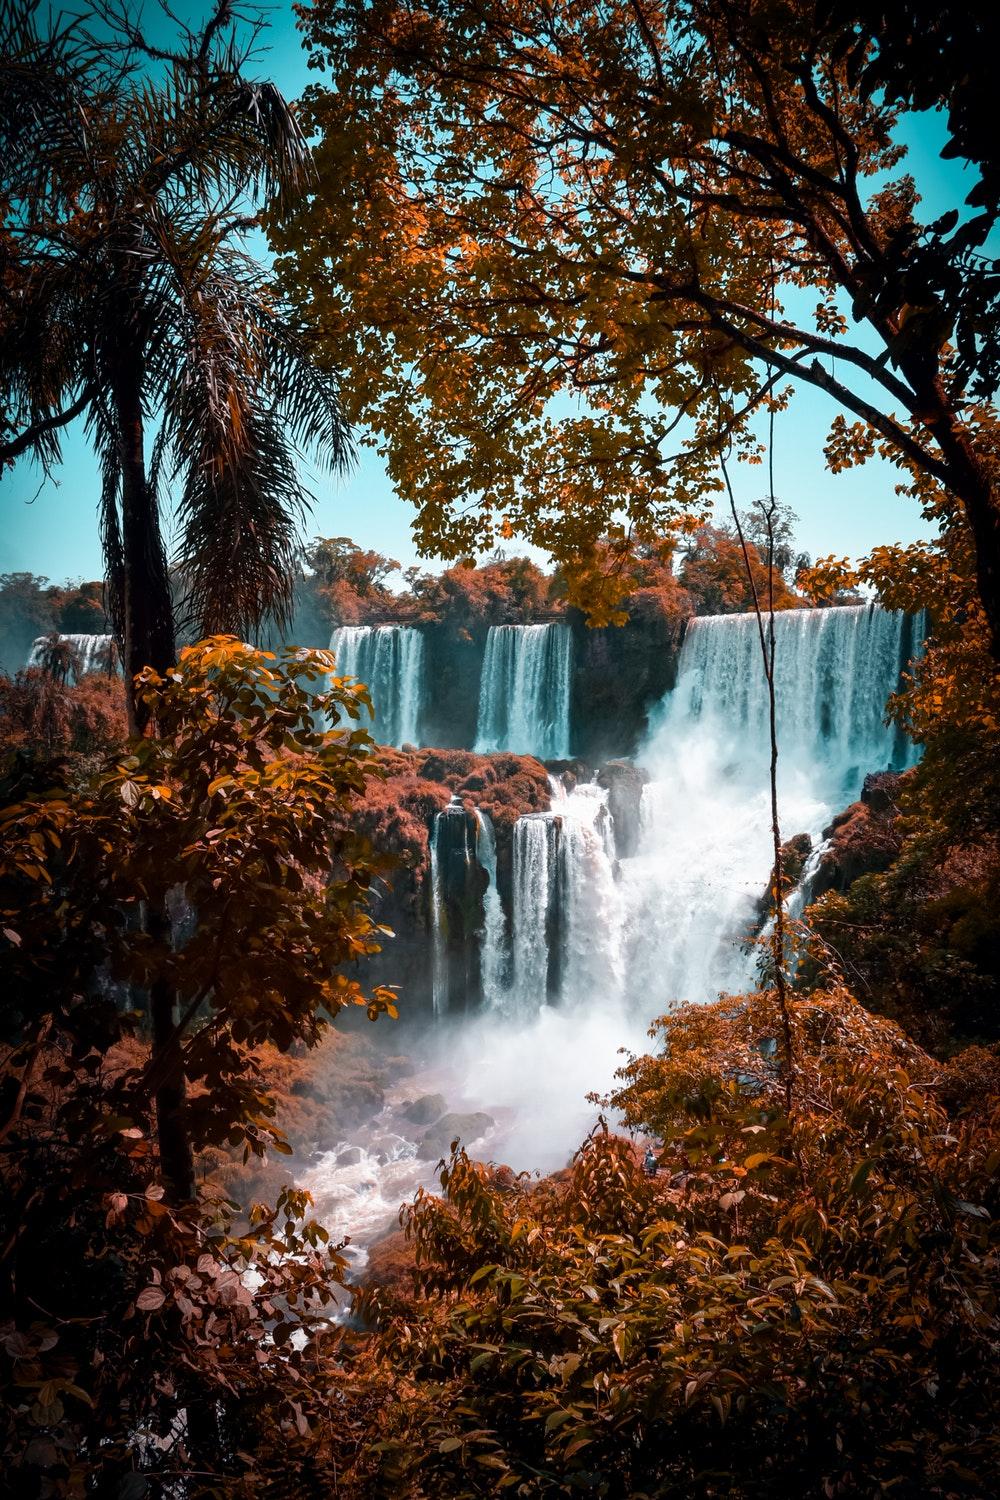 500+ Waterfall Image [Stunning!]